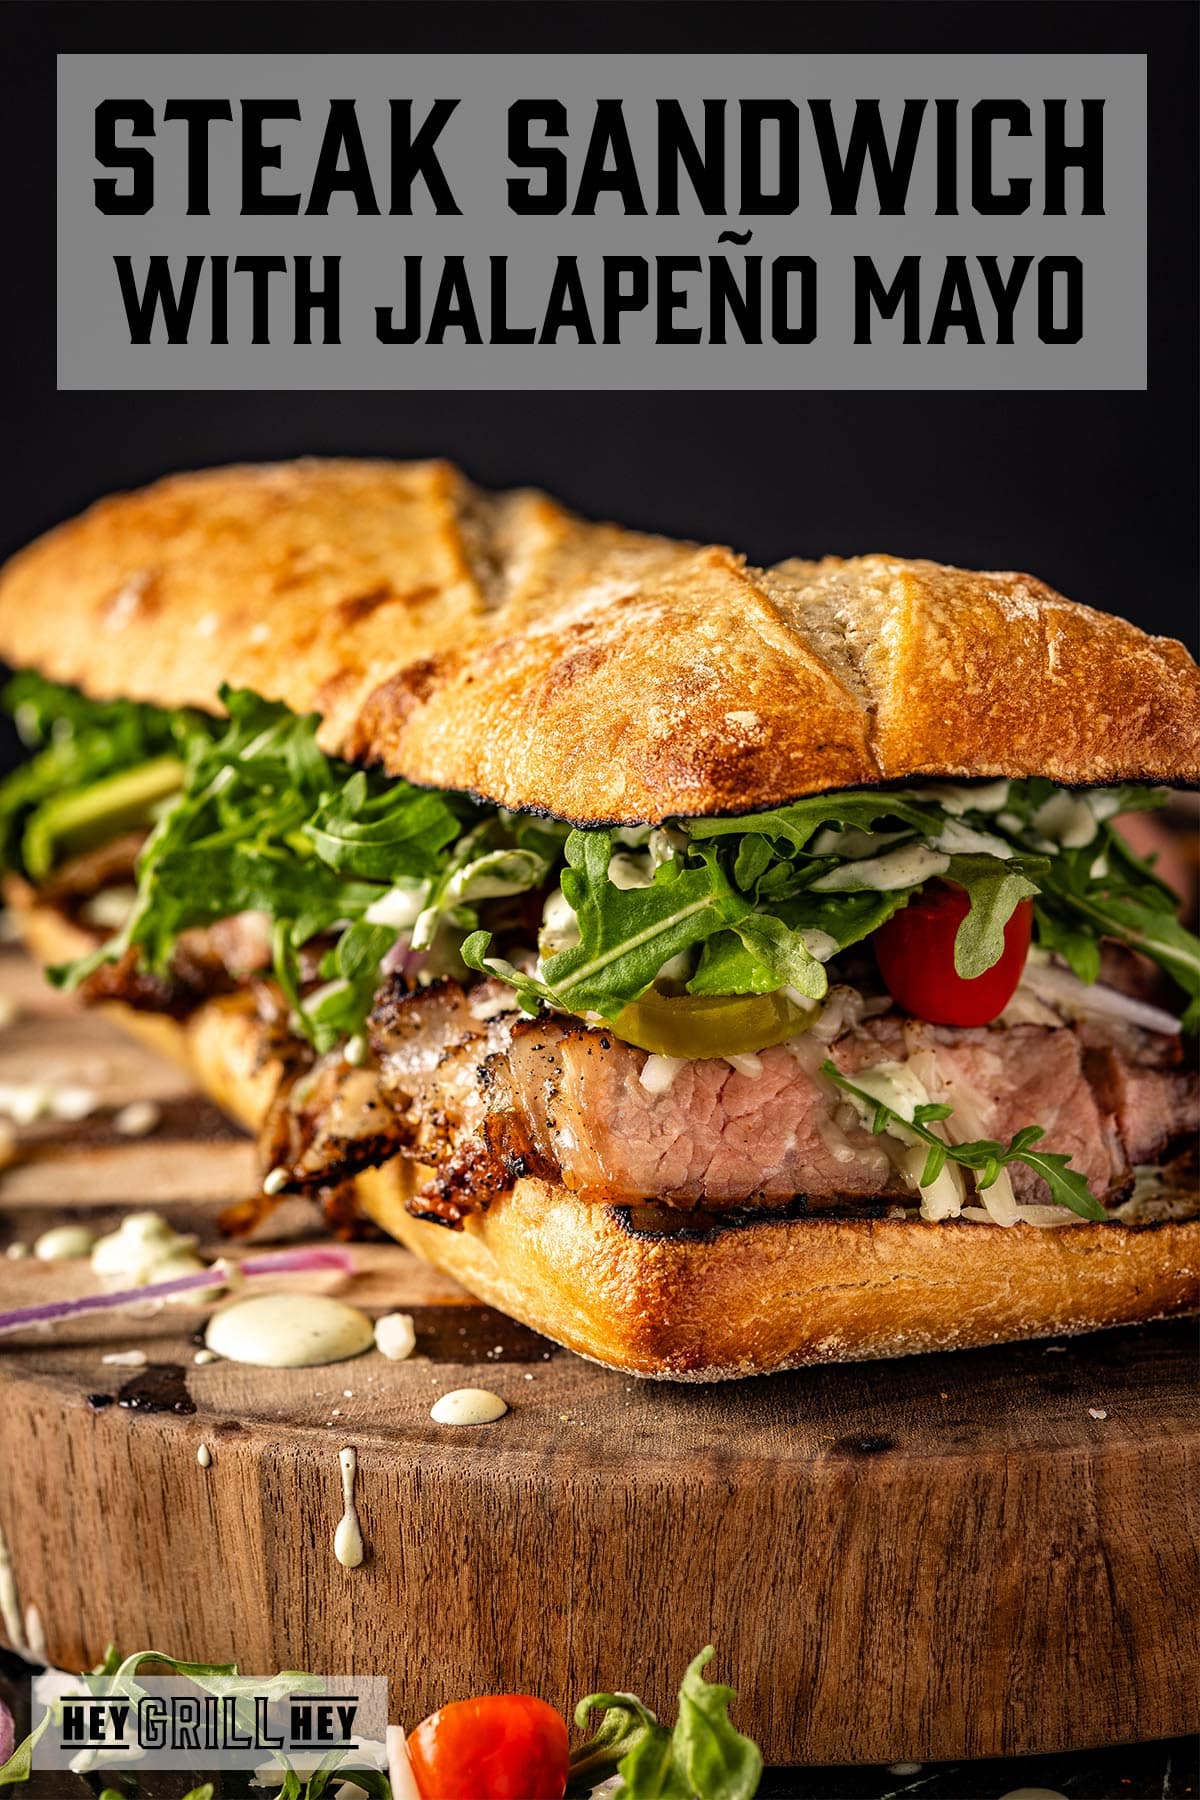 Steak sandwiches on wooden platter. Text reads "Steak Sandwich with Jalapeño Mayo".